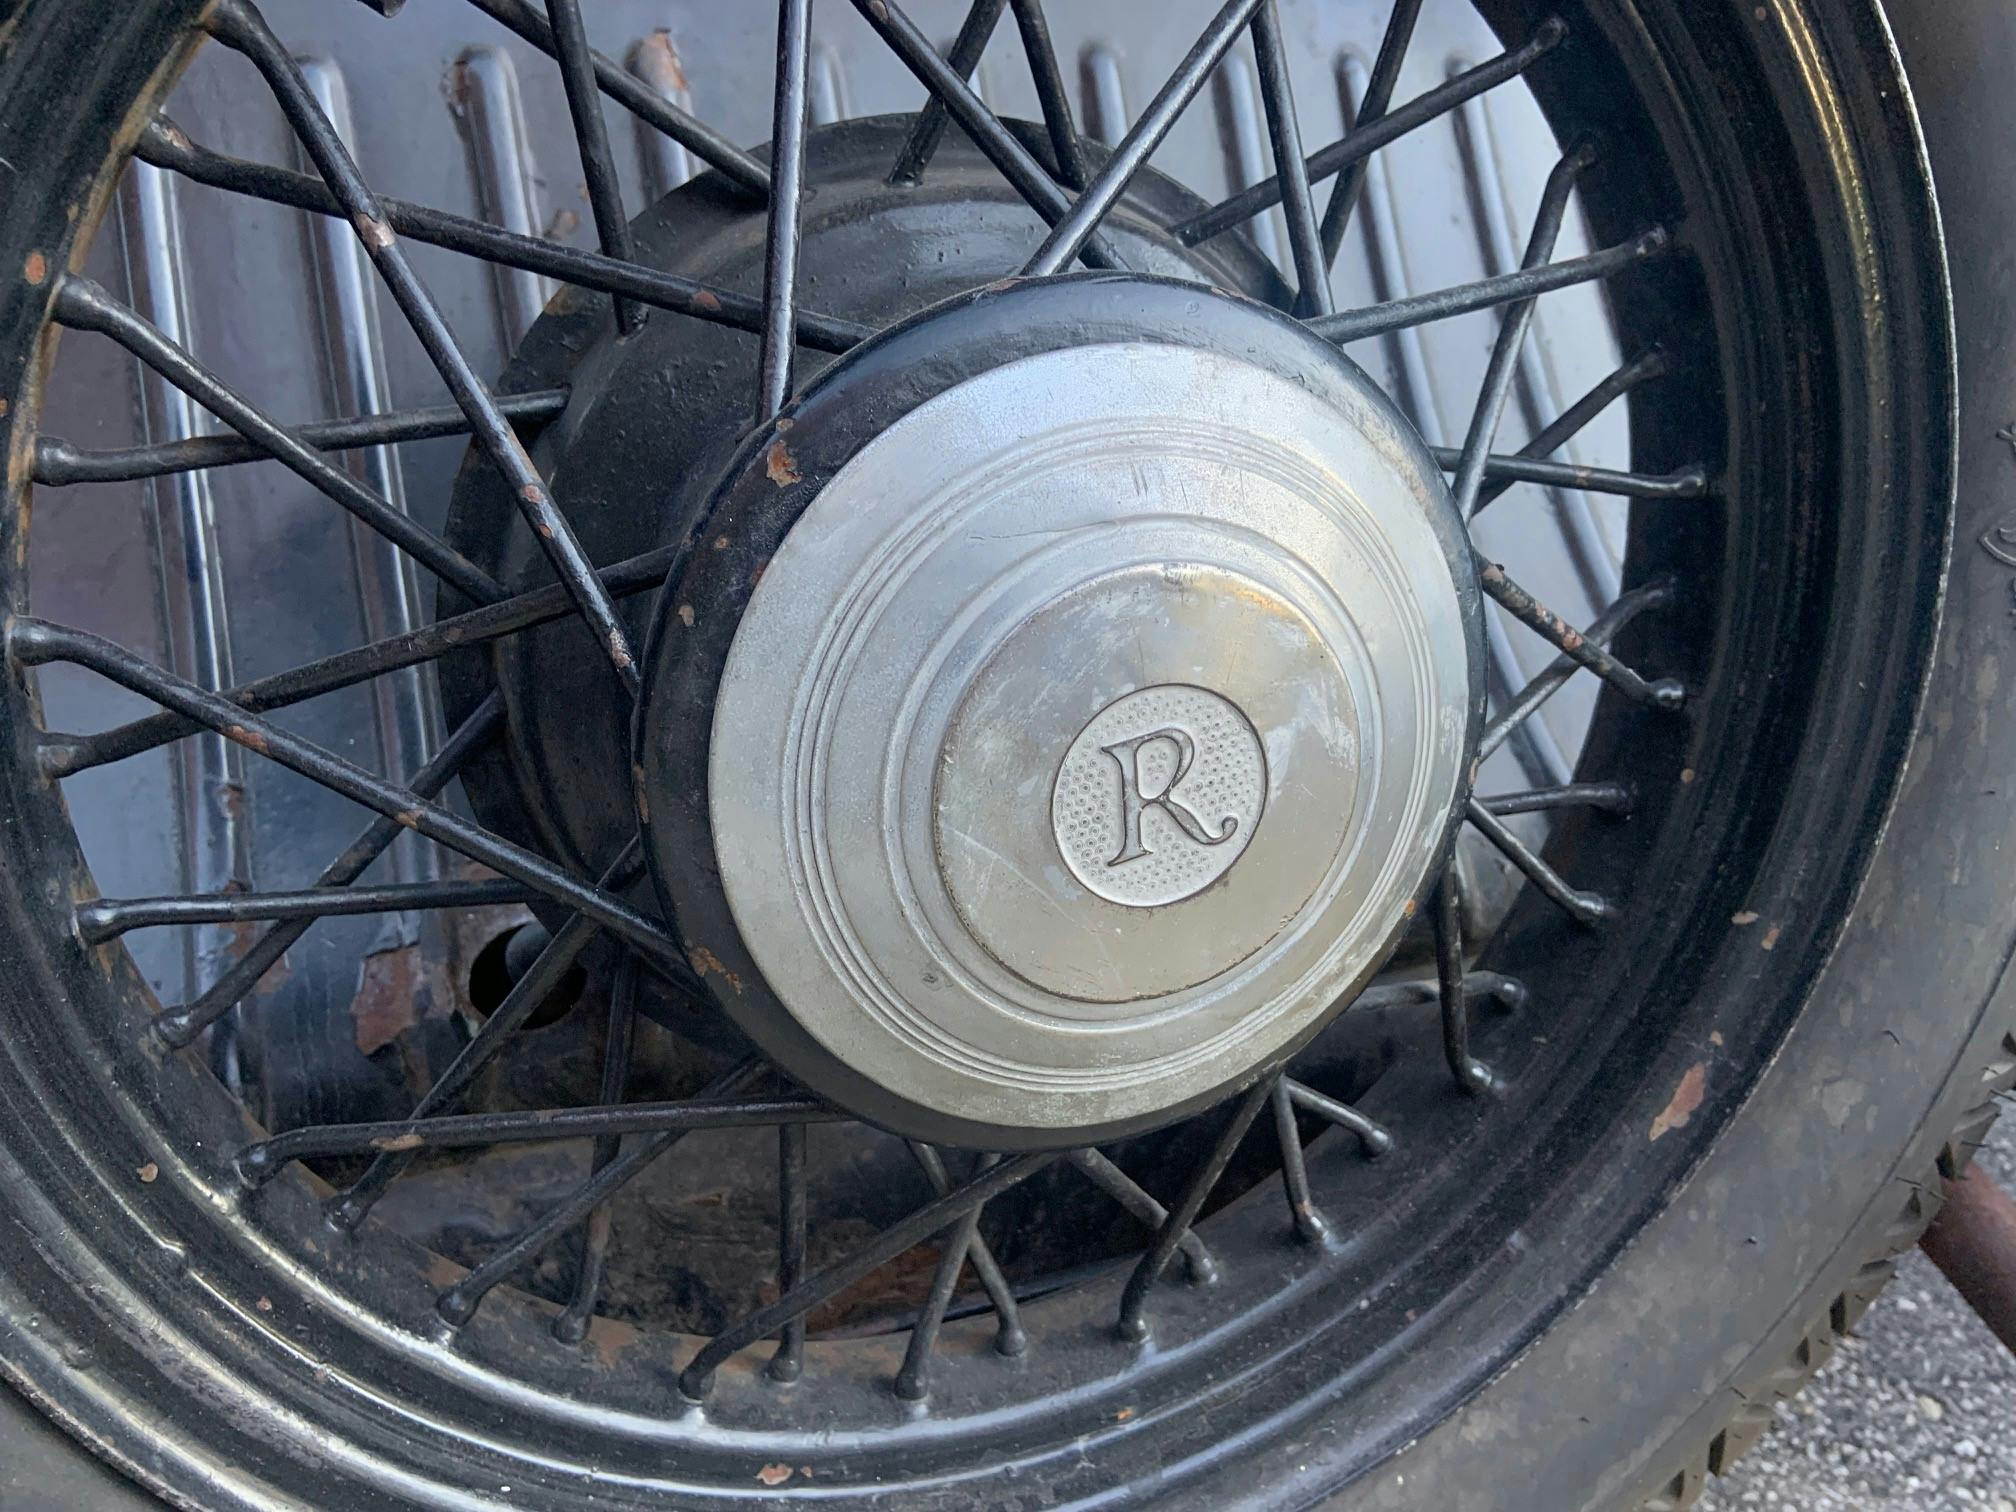 1932 Rockne - close-up wheel